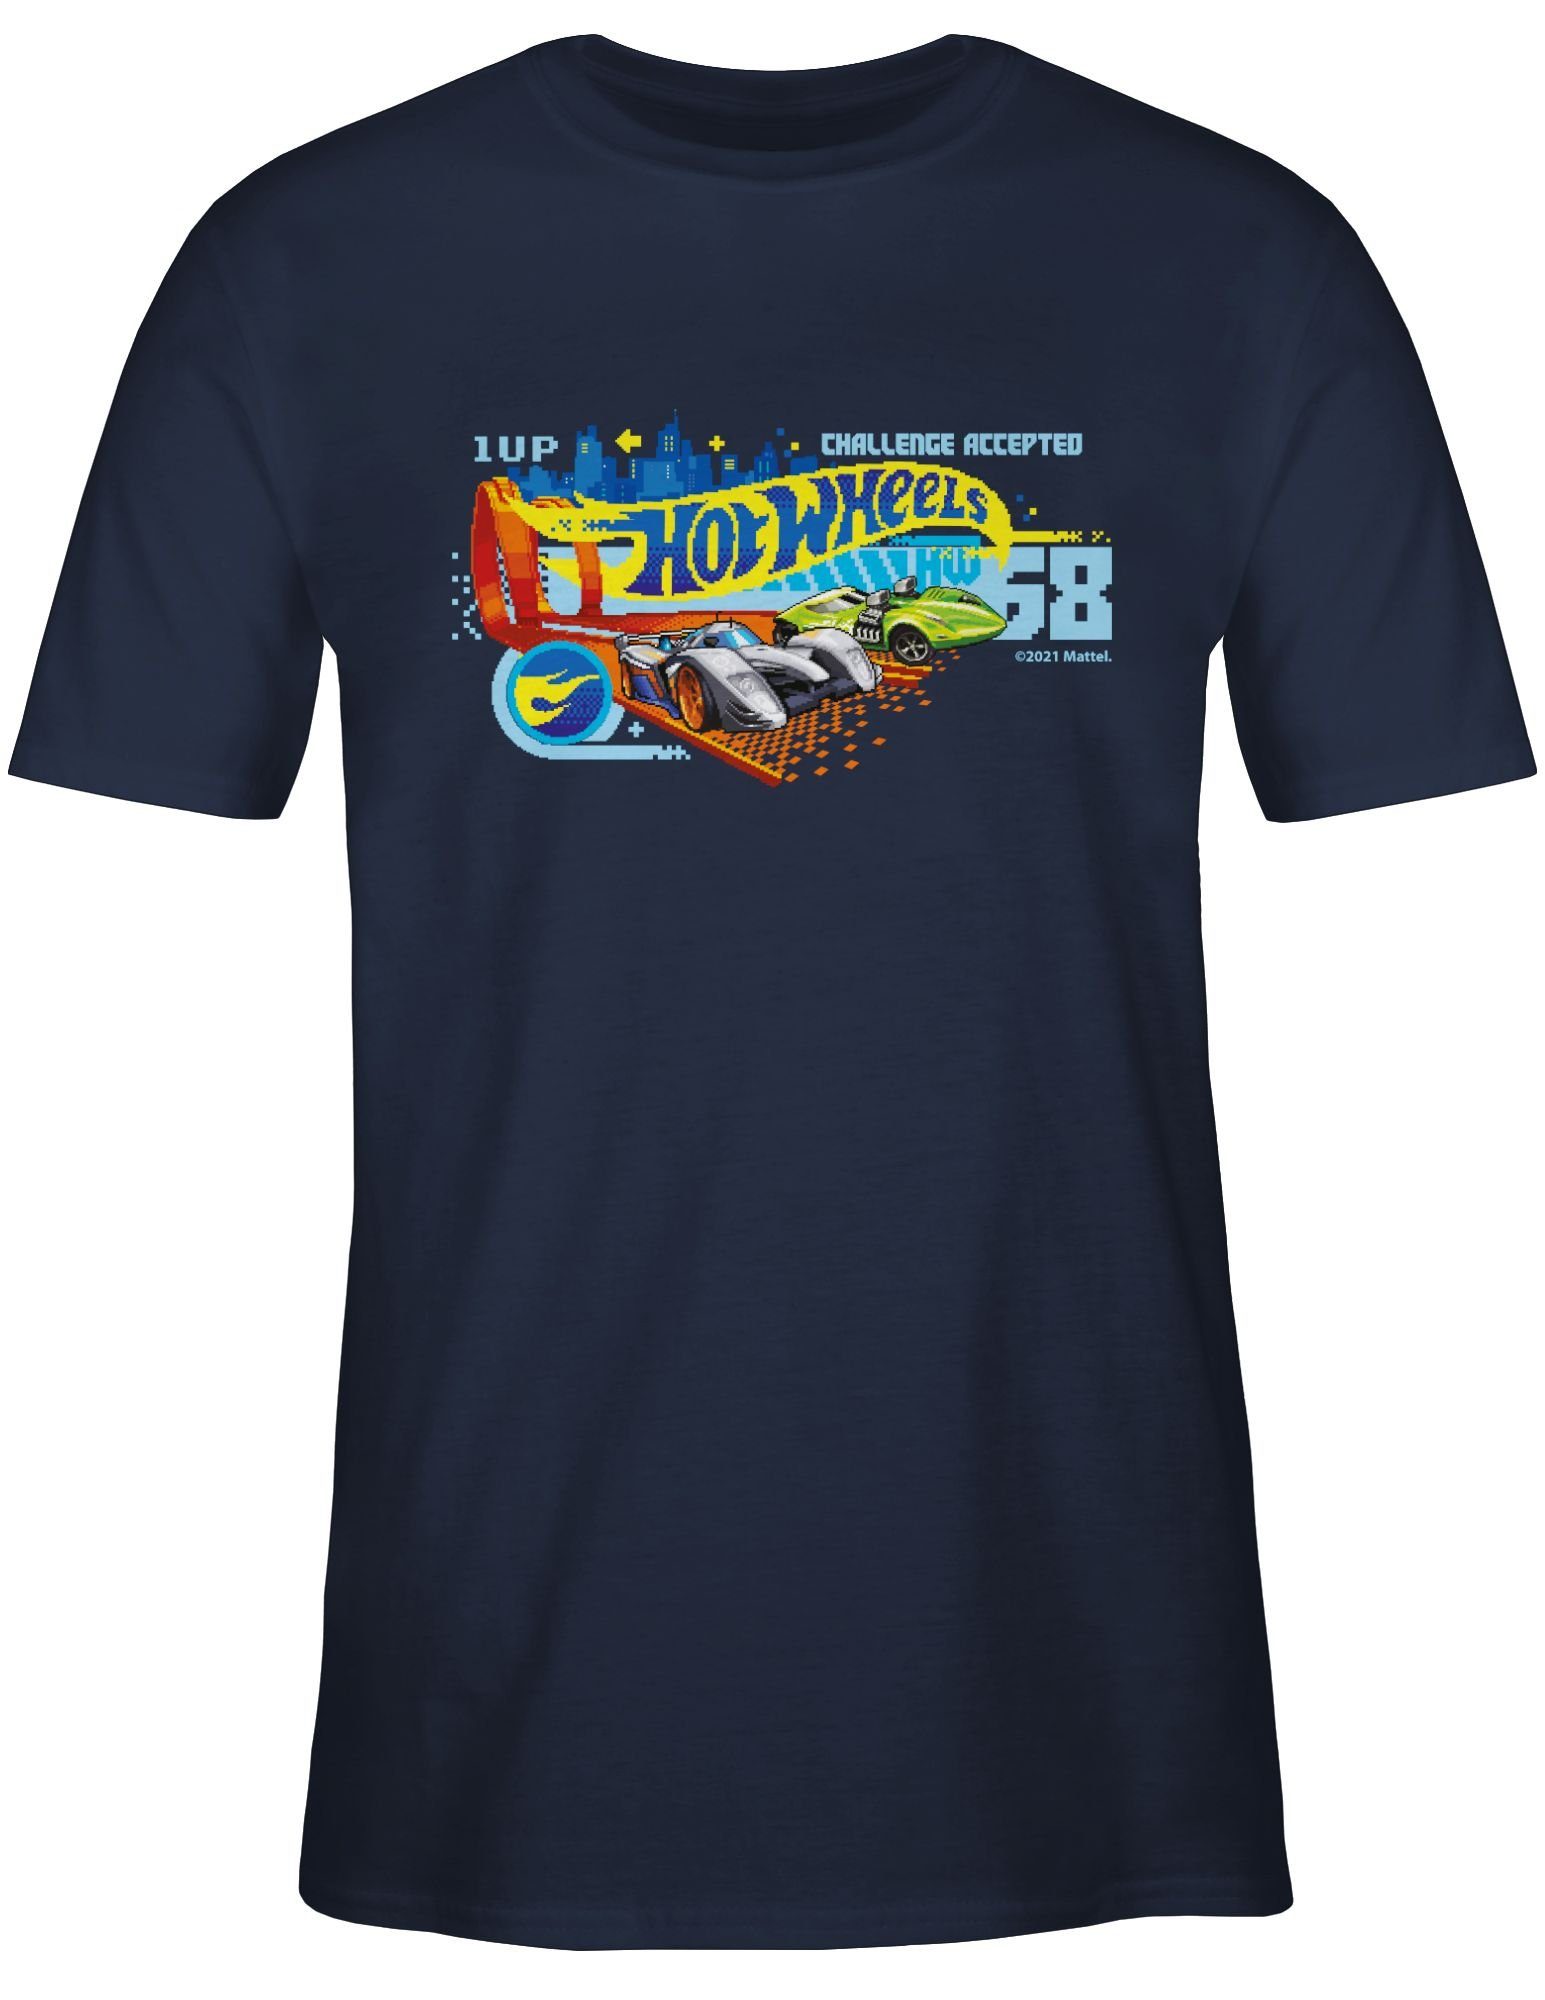 8-Bit Blau 01 Wheels Shirtracer Herren Navy Challenge T-Shirt Accepted Hot